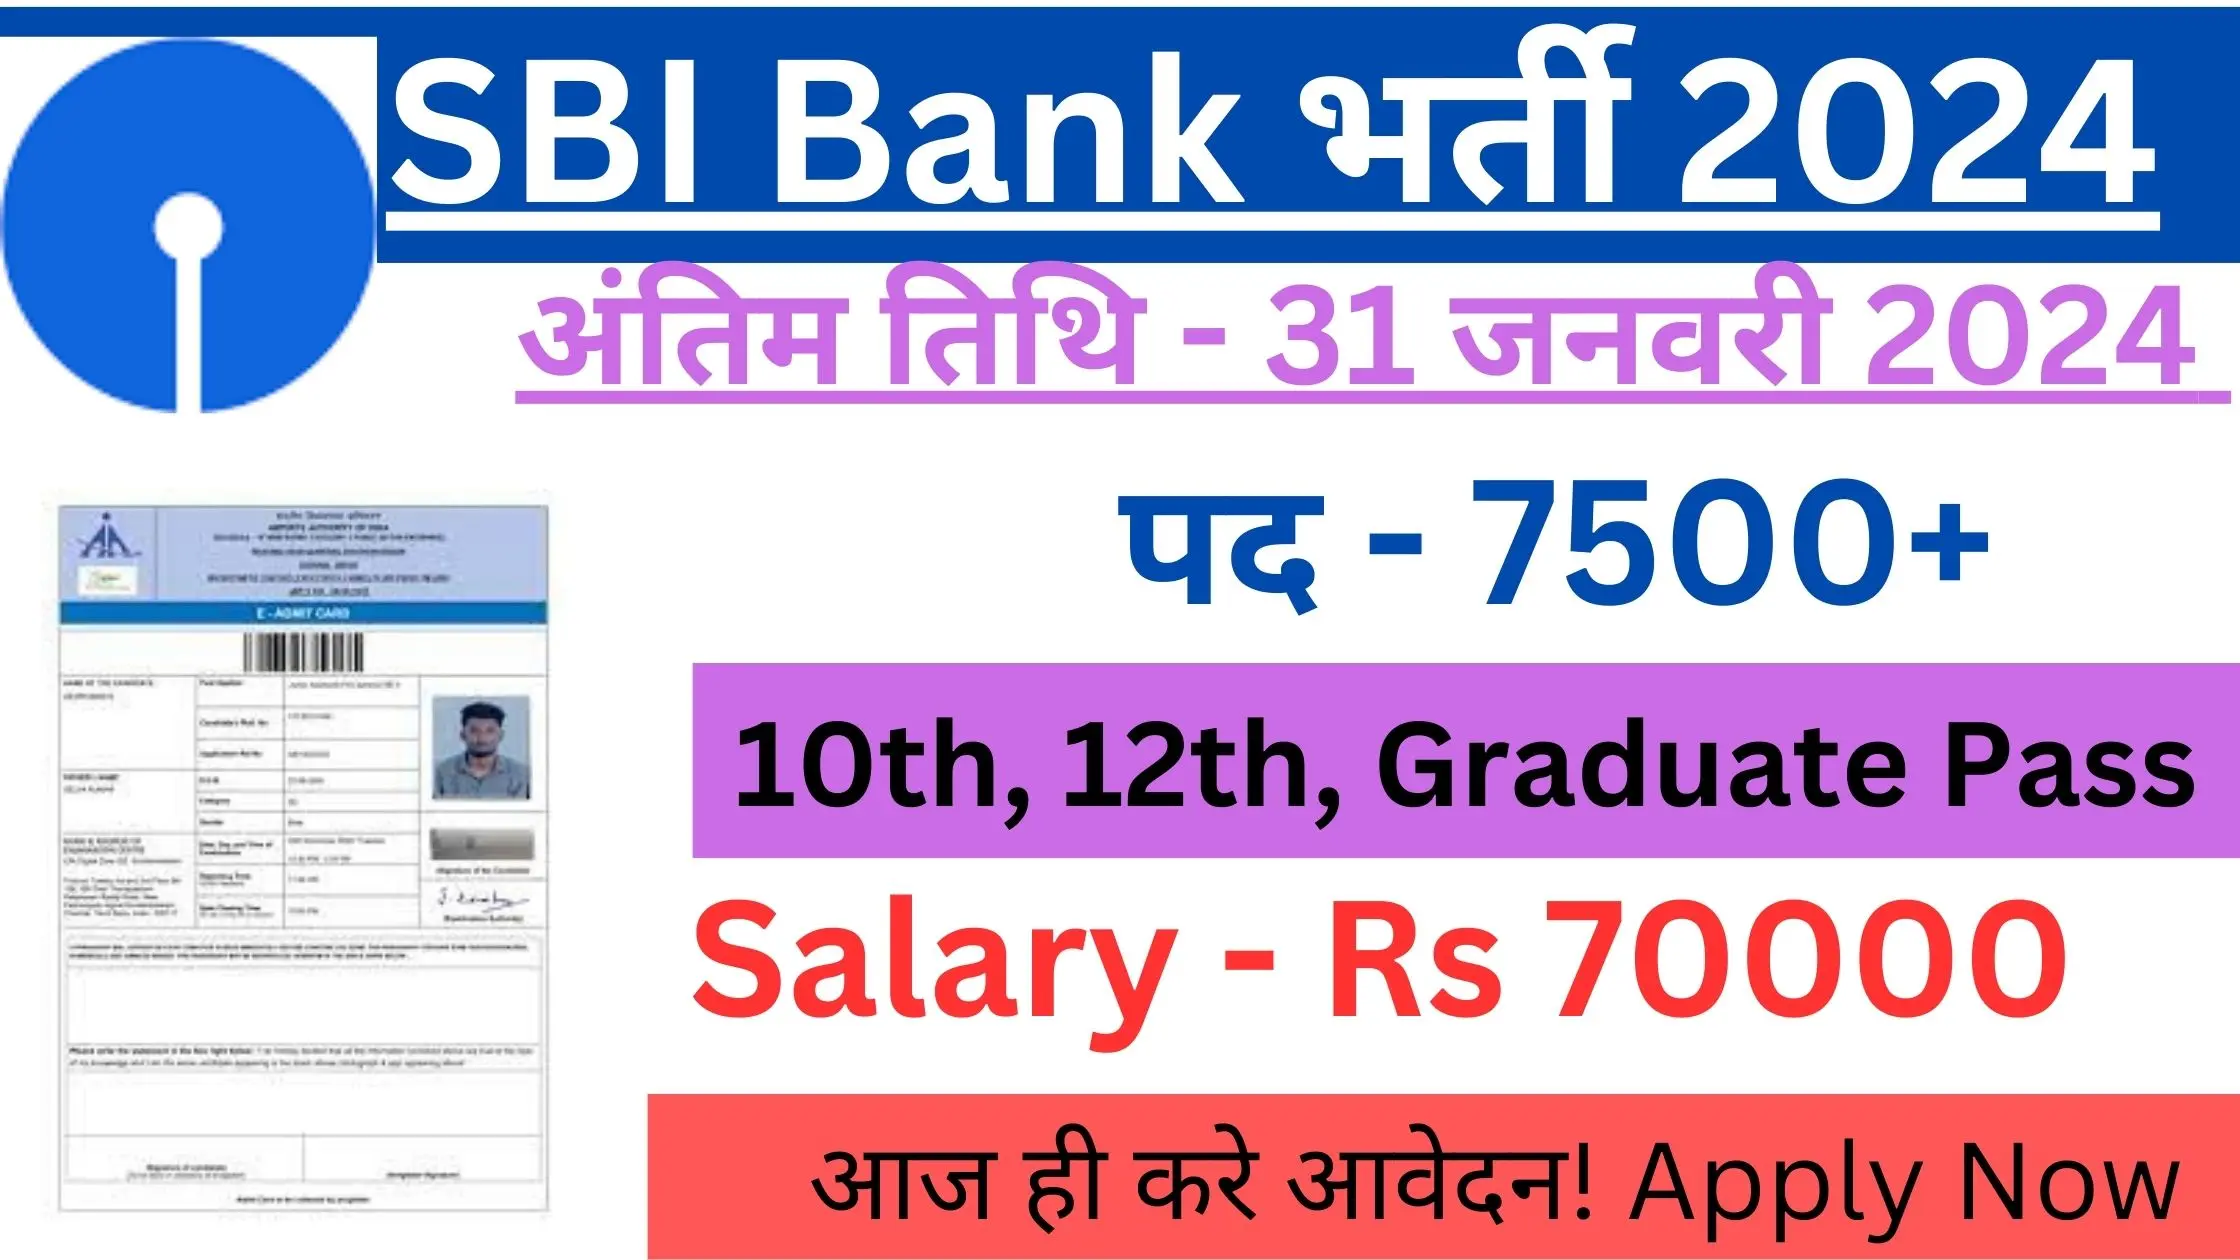 SBI Bank Recruitment 2024